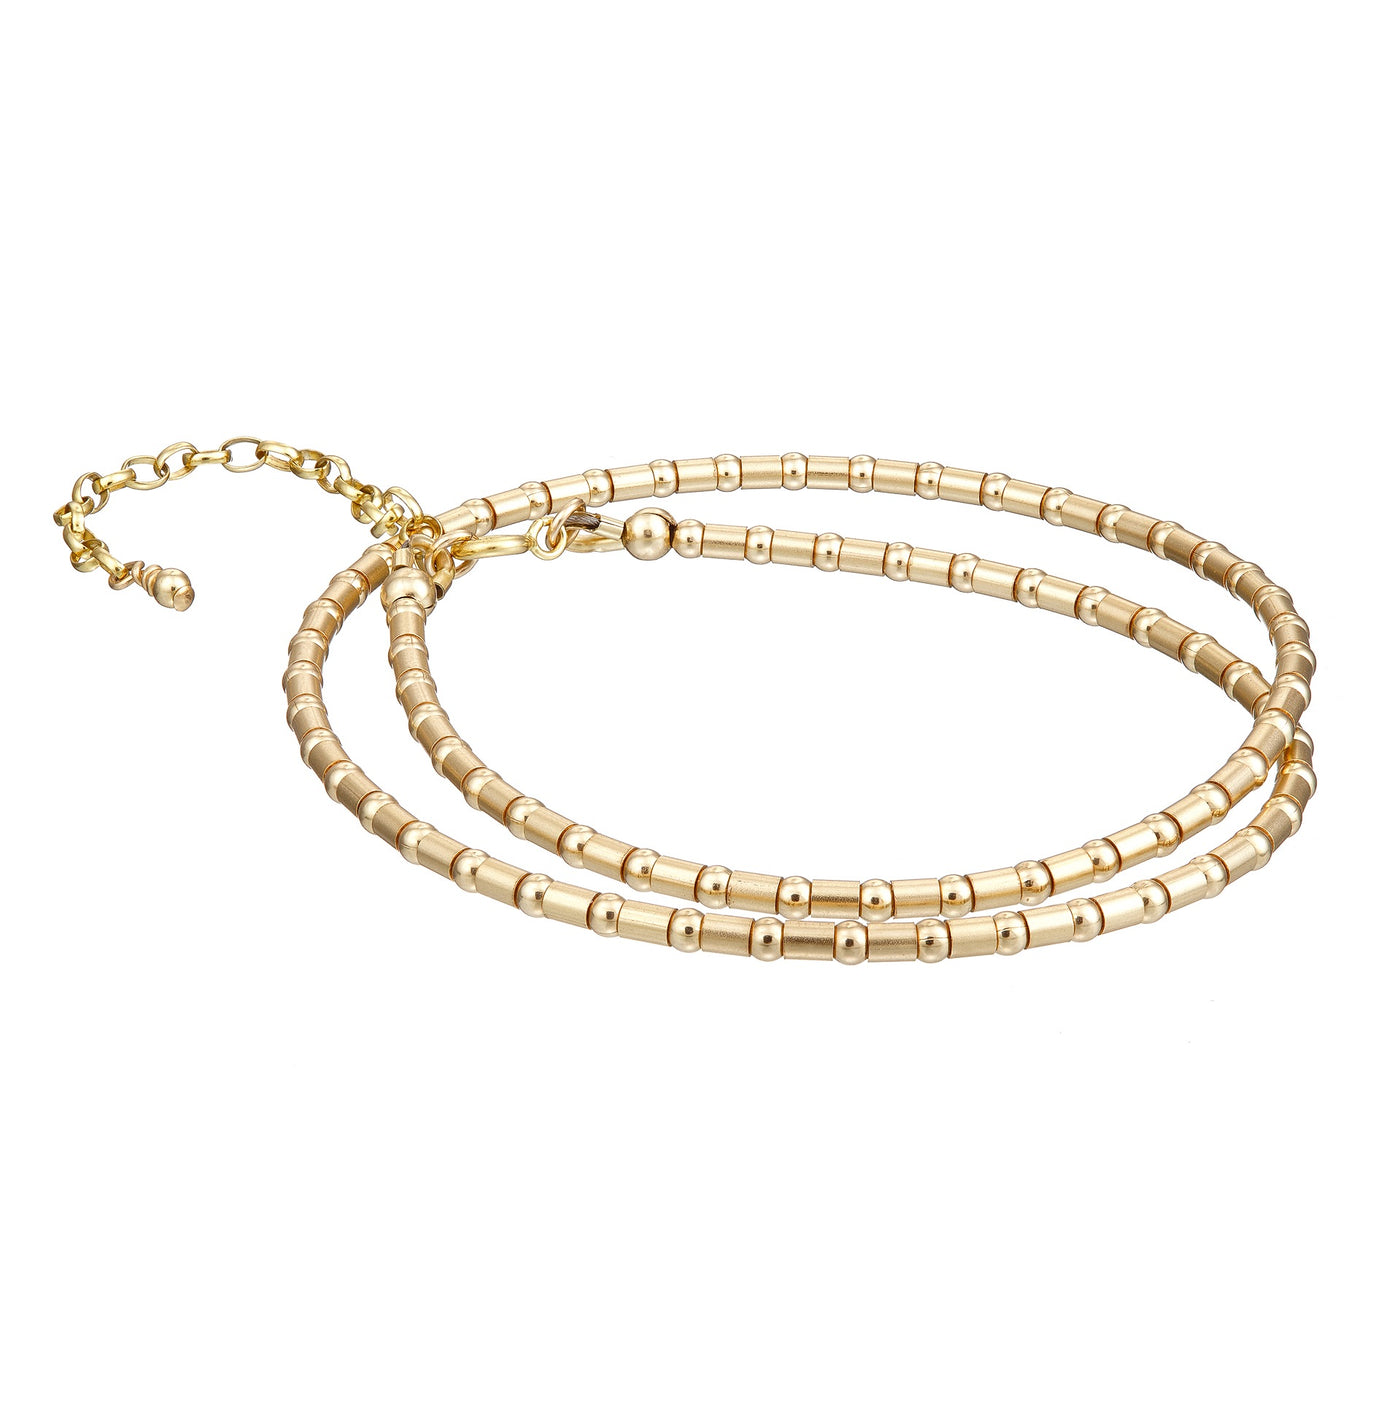 14kt GoldFill Crimp Bead Necklace